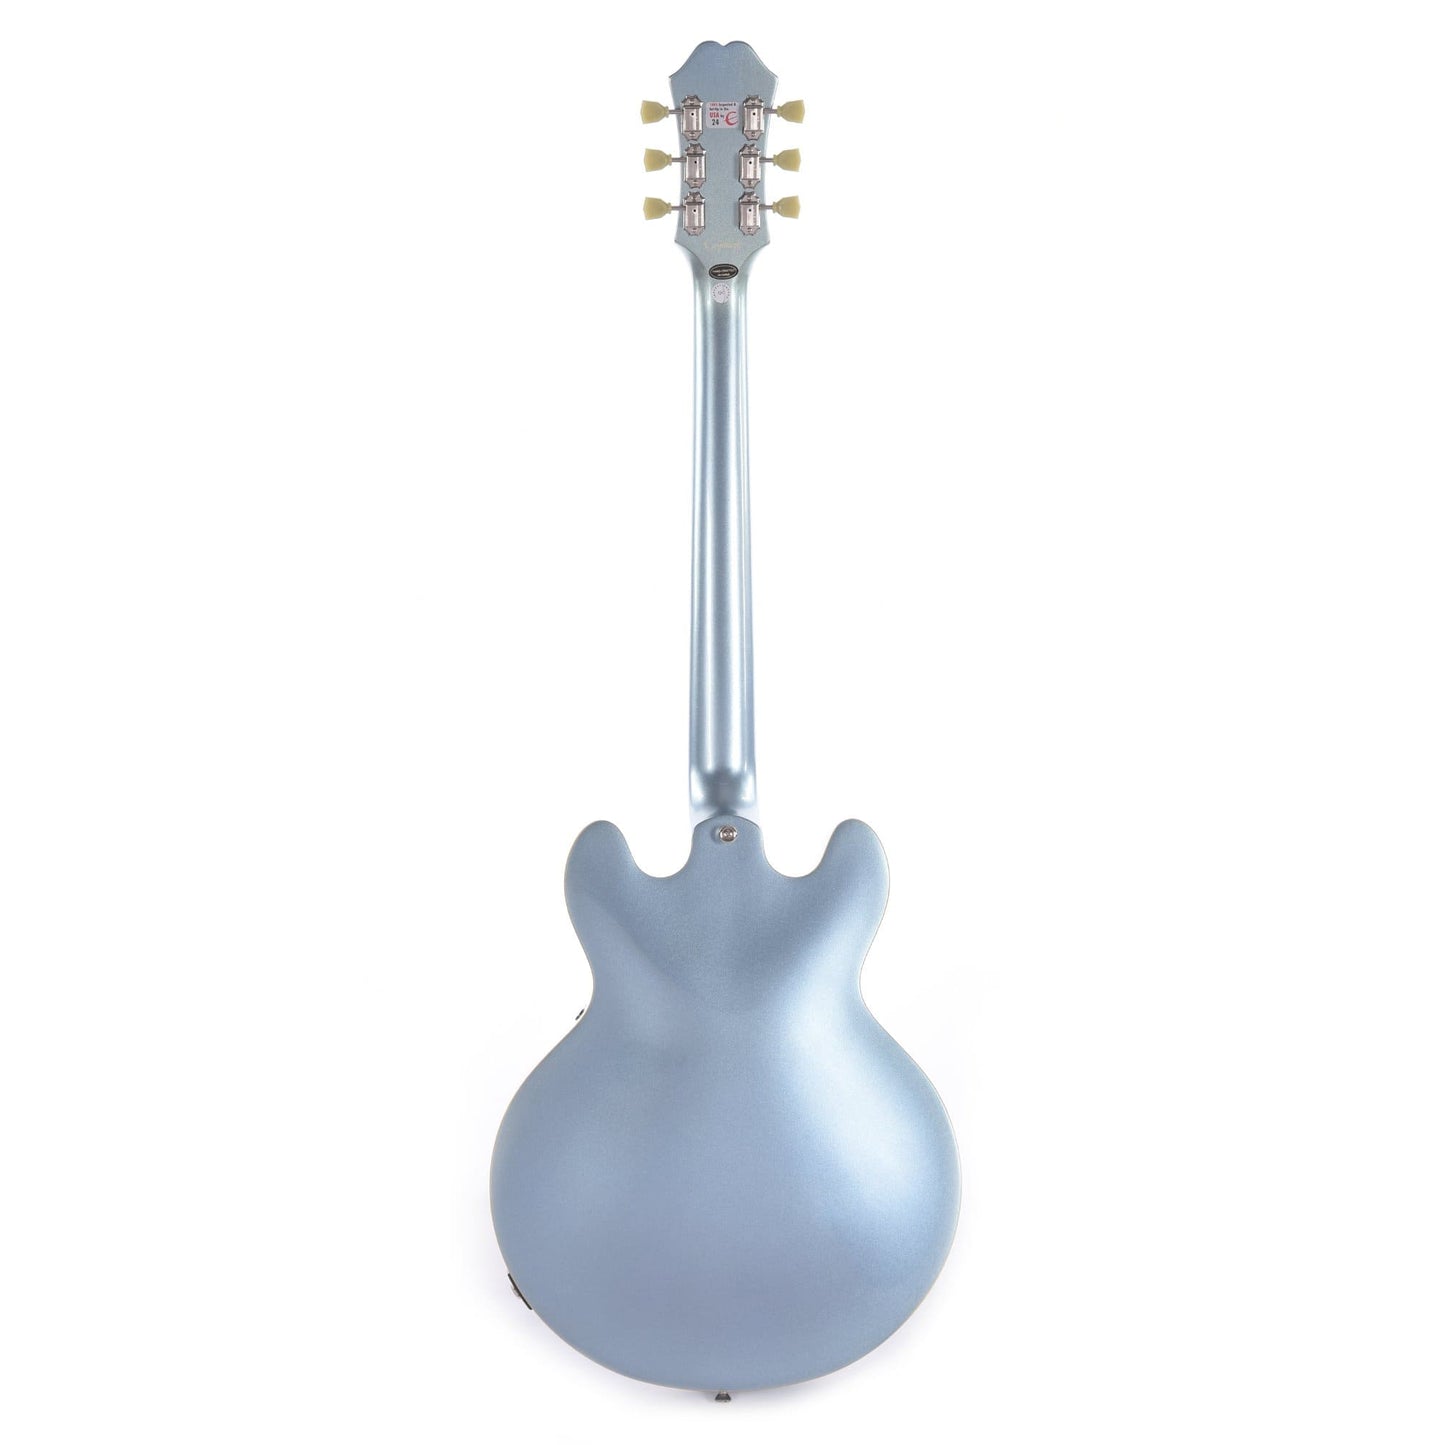 Epiphone ES-339 Pro Pelham Blue w/Alnico Classic Pros & Coil-Tap Electric Guitars / Solid Body